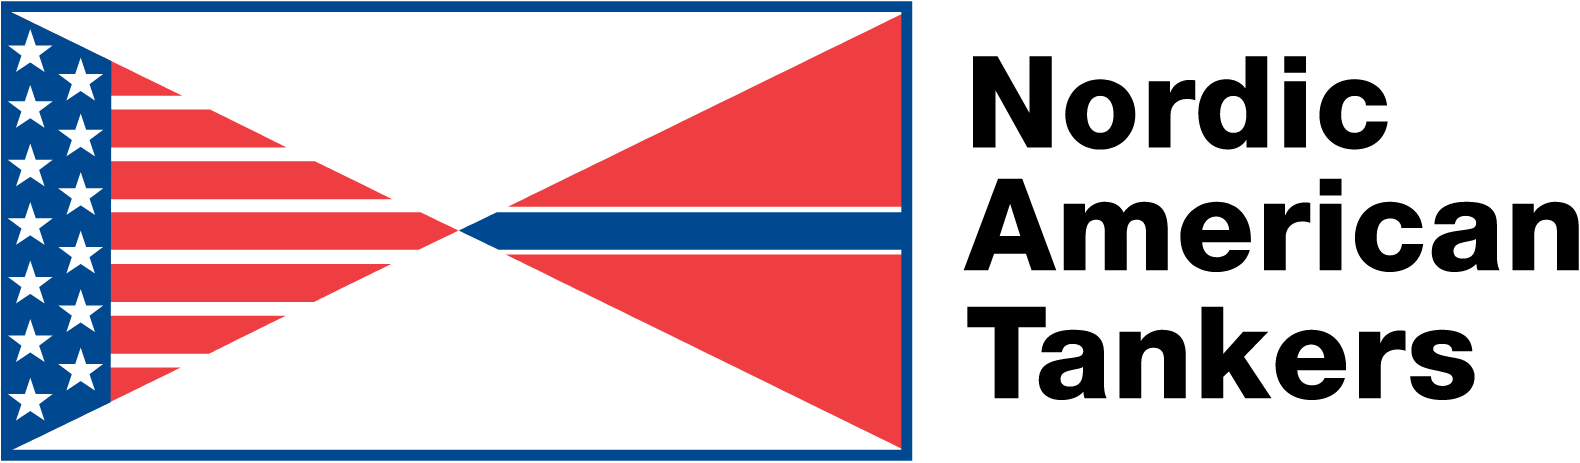 Nordic American Tankers logo large (transparent PNG)